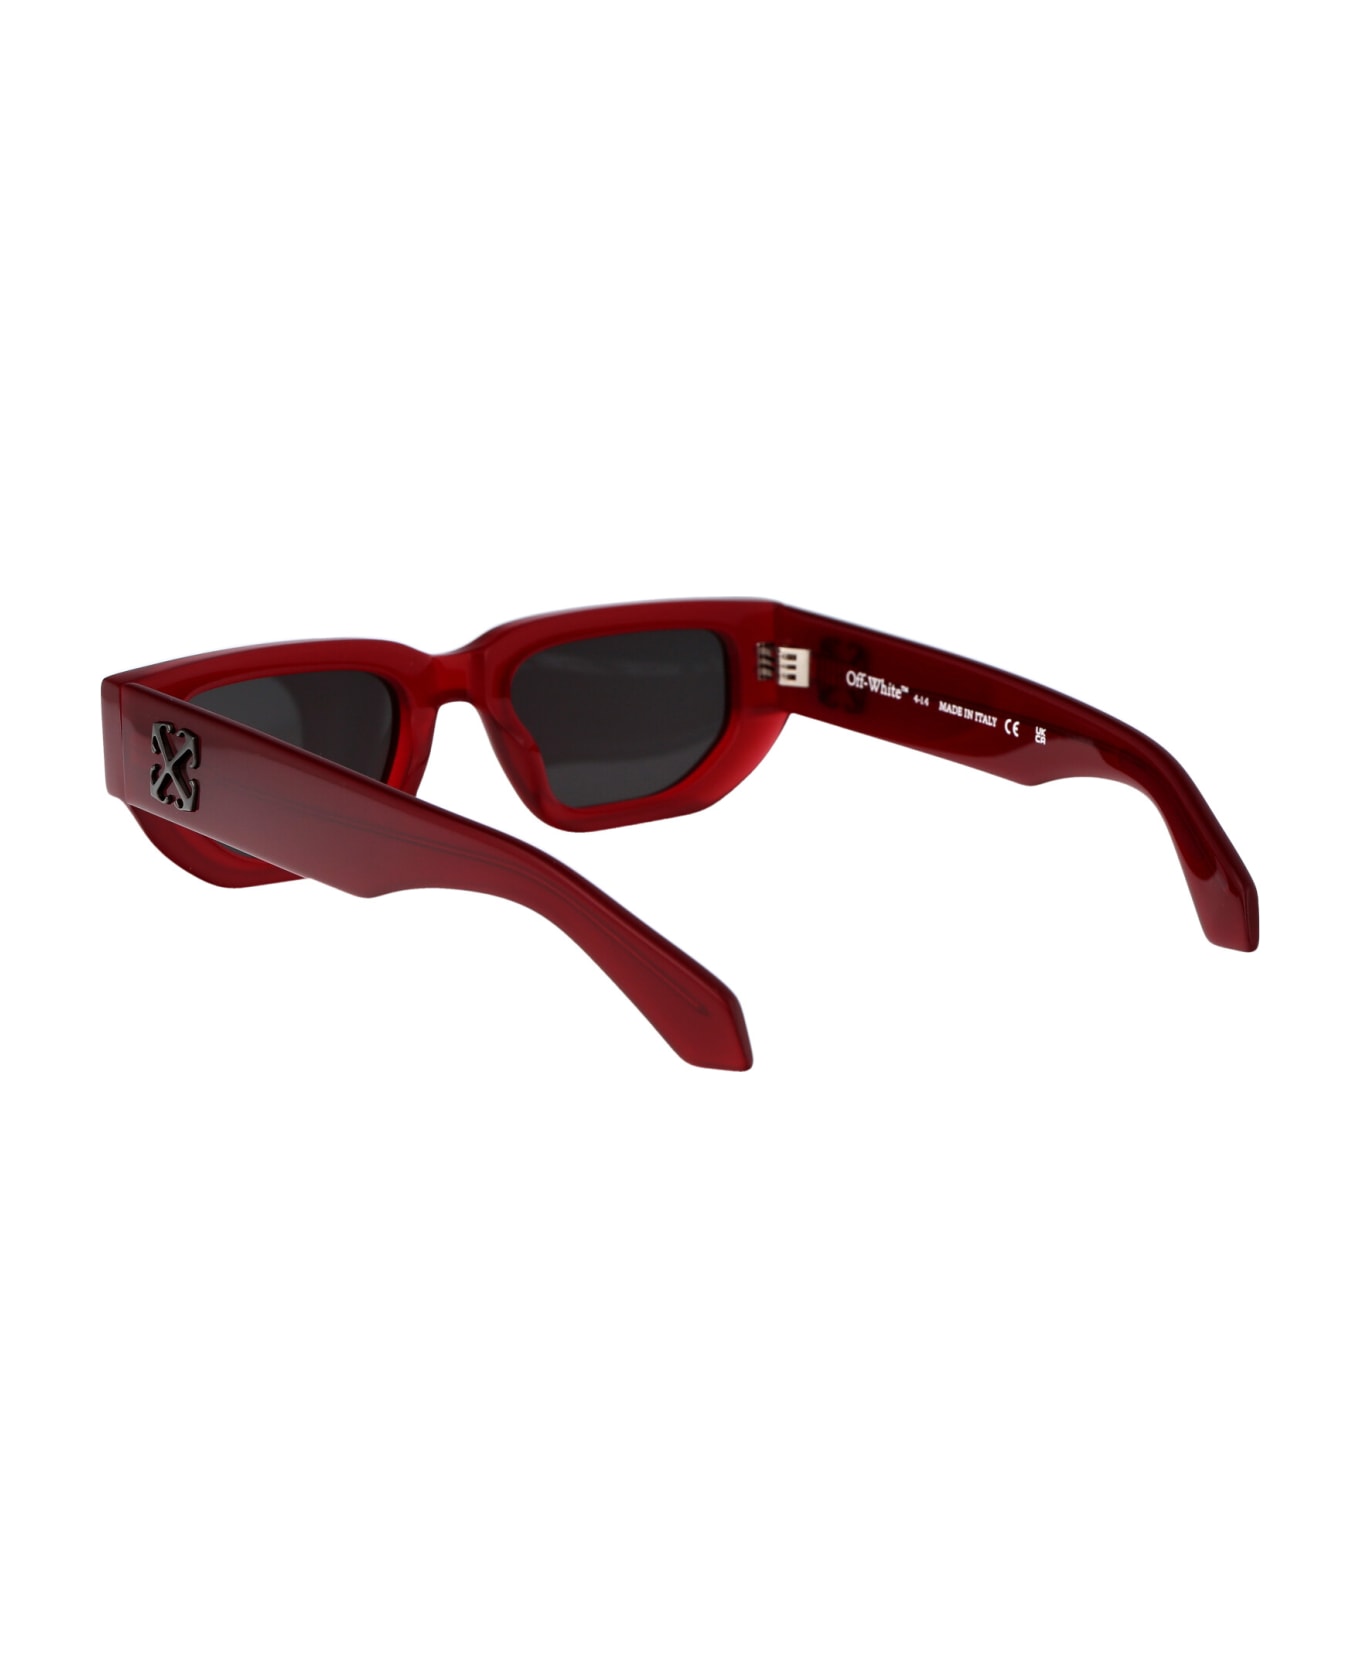 Off-White Greeley Sunglasses - 2807 BURGUNDY  サングラス